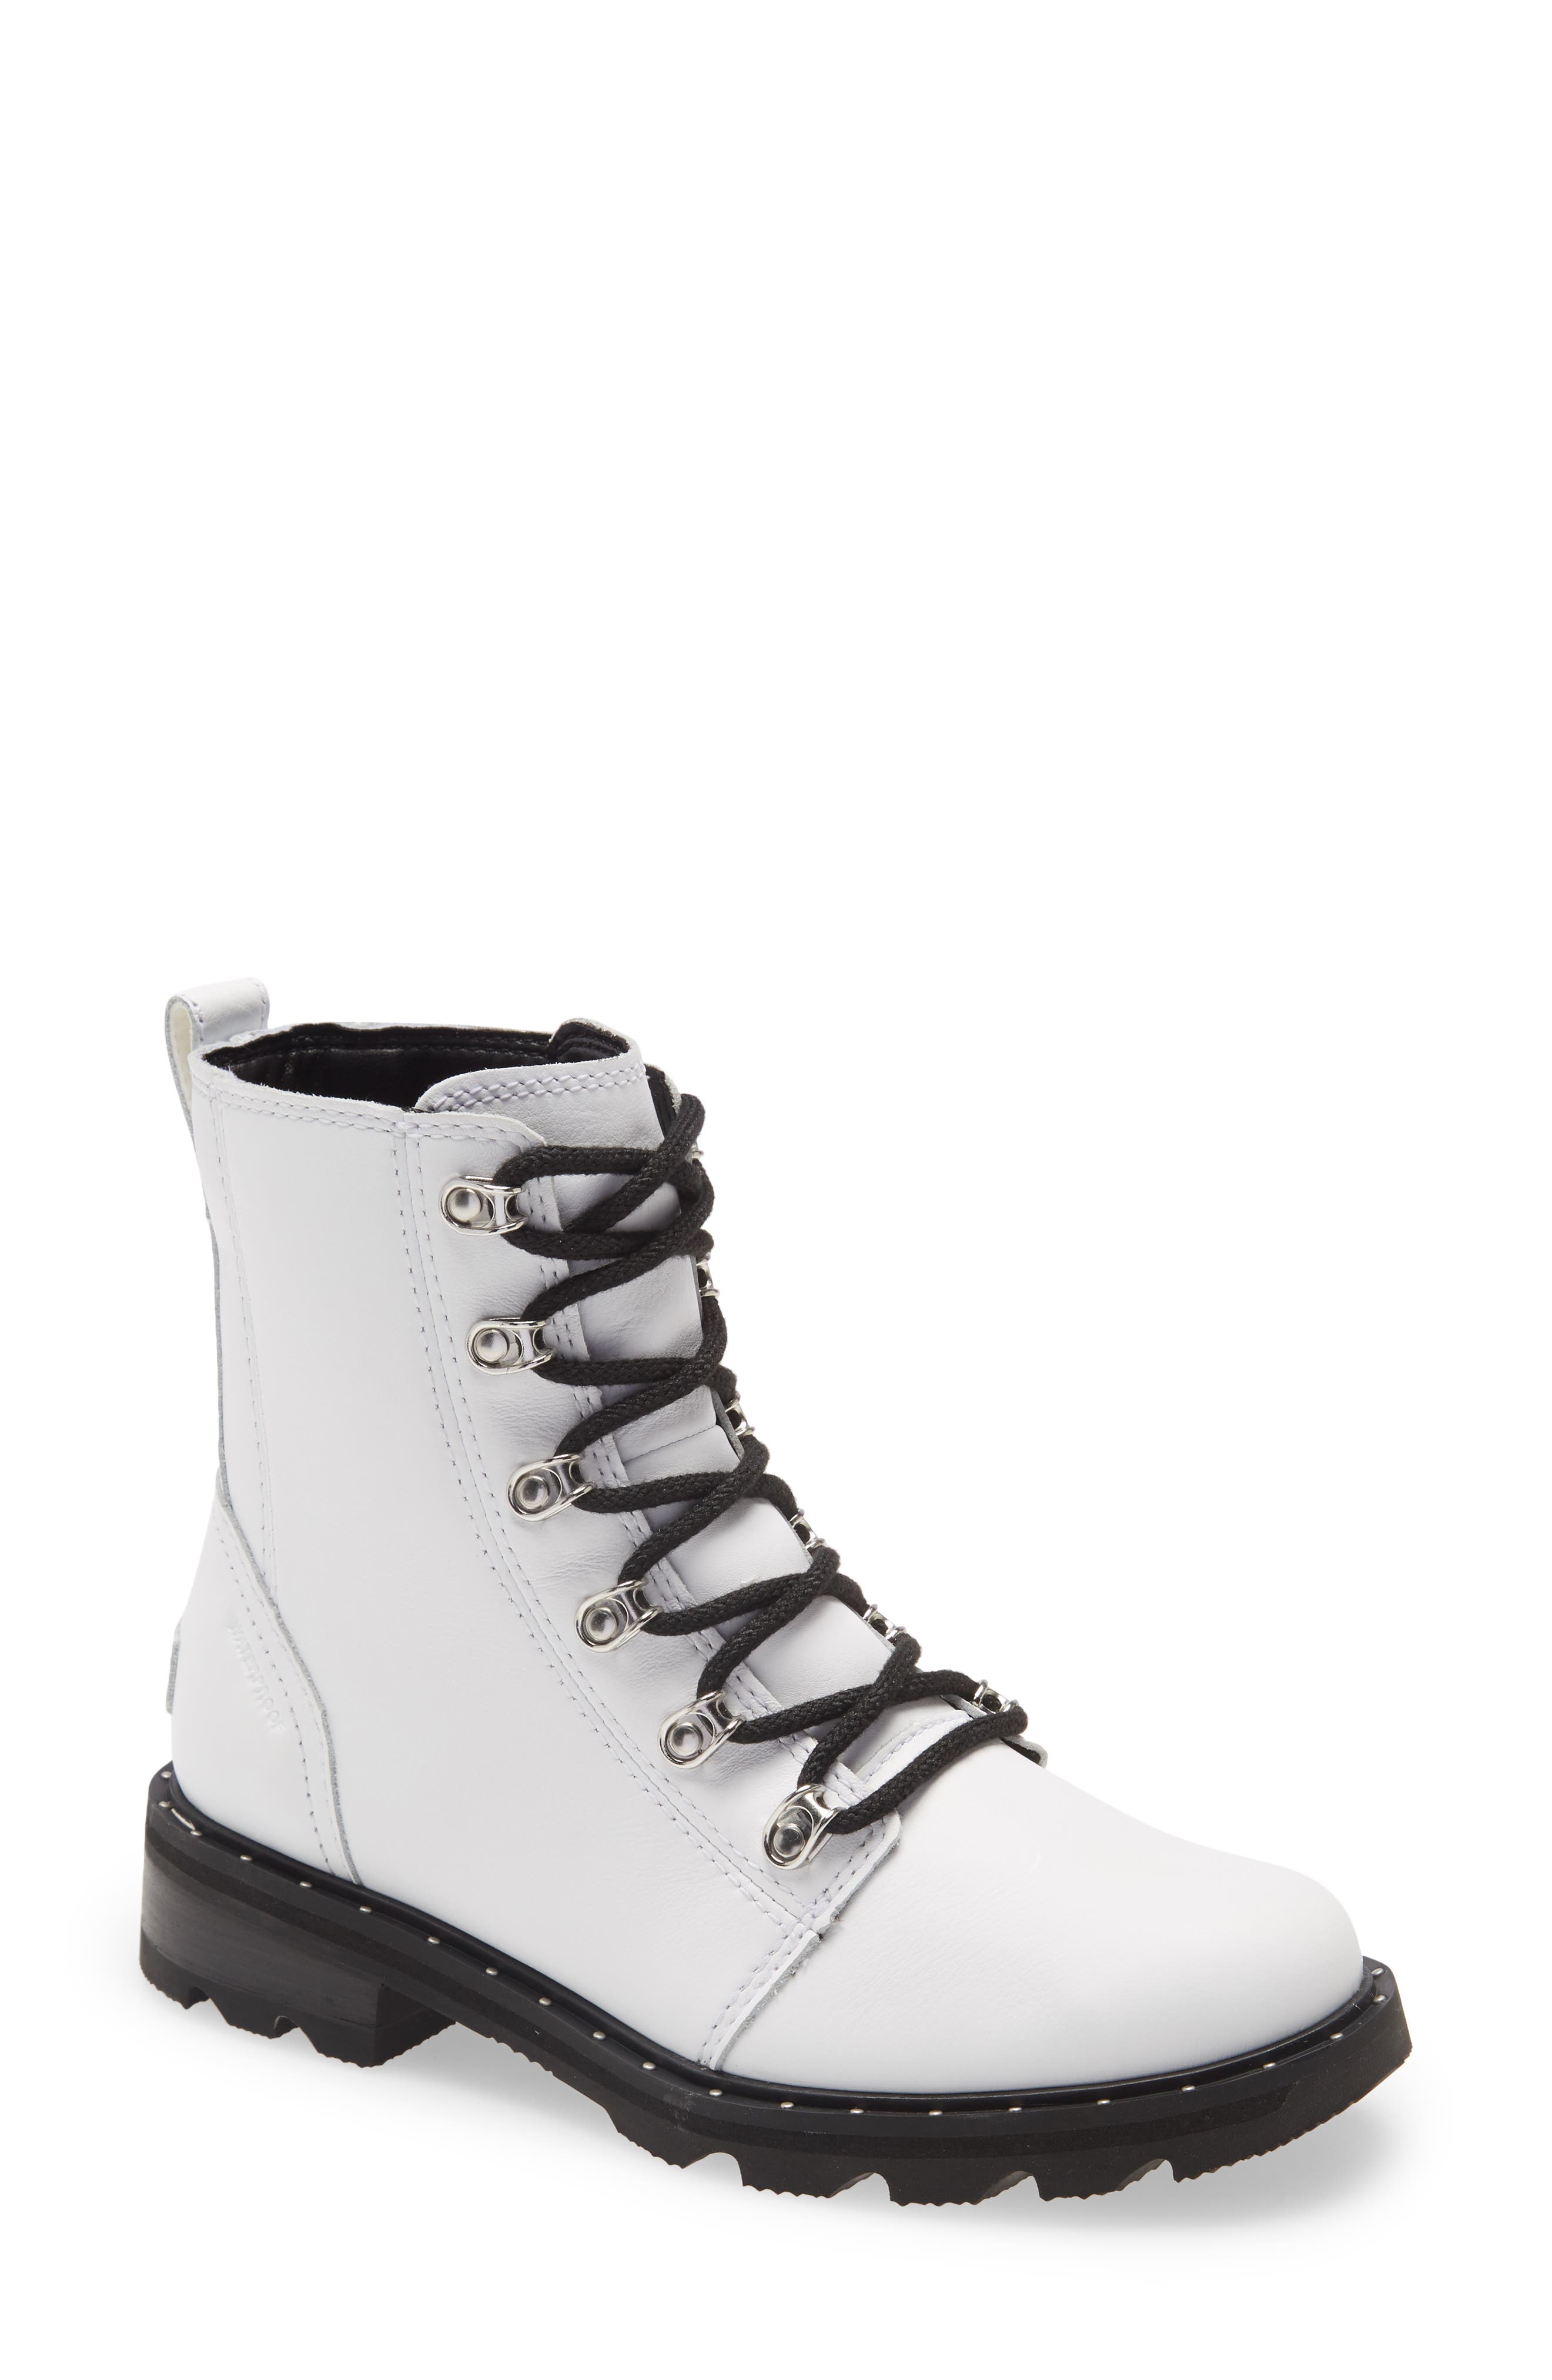 sorel boots white